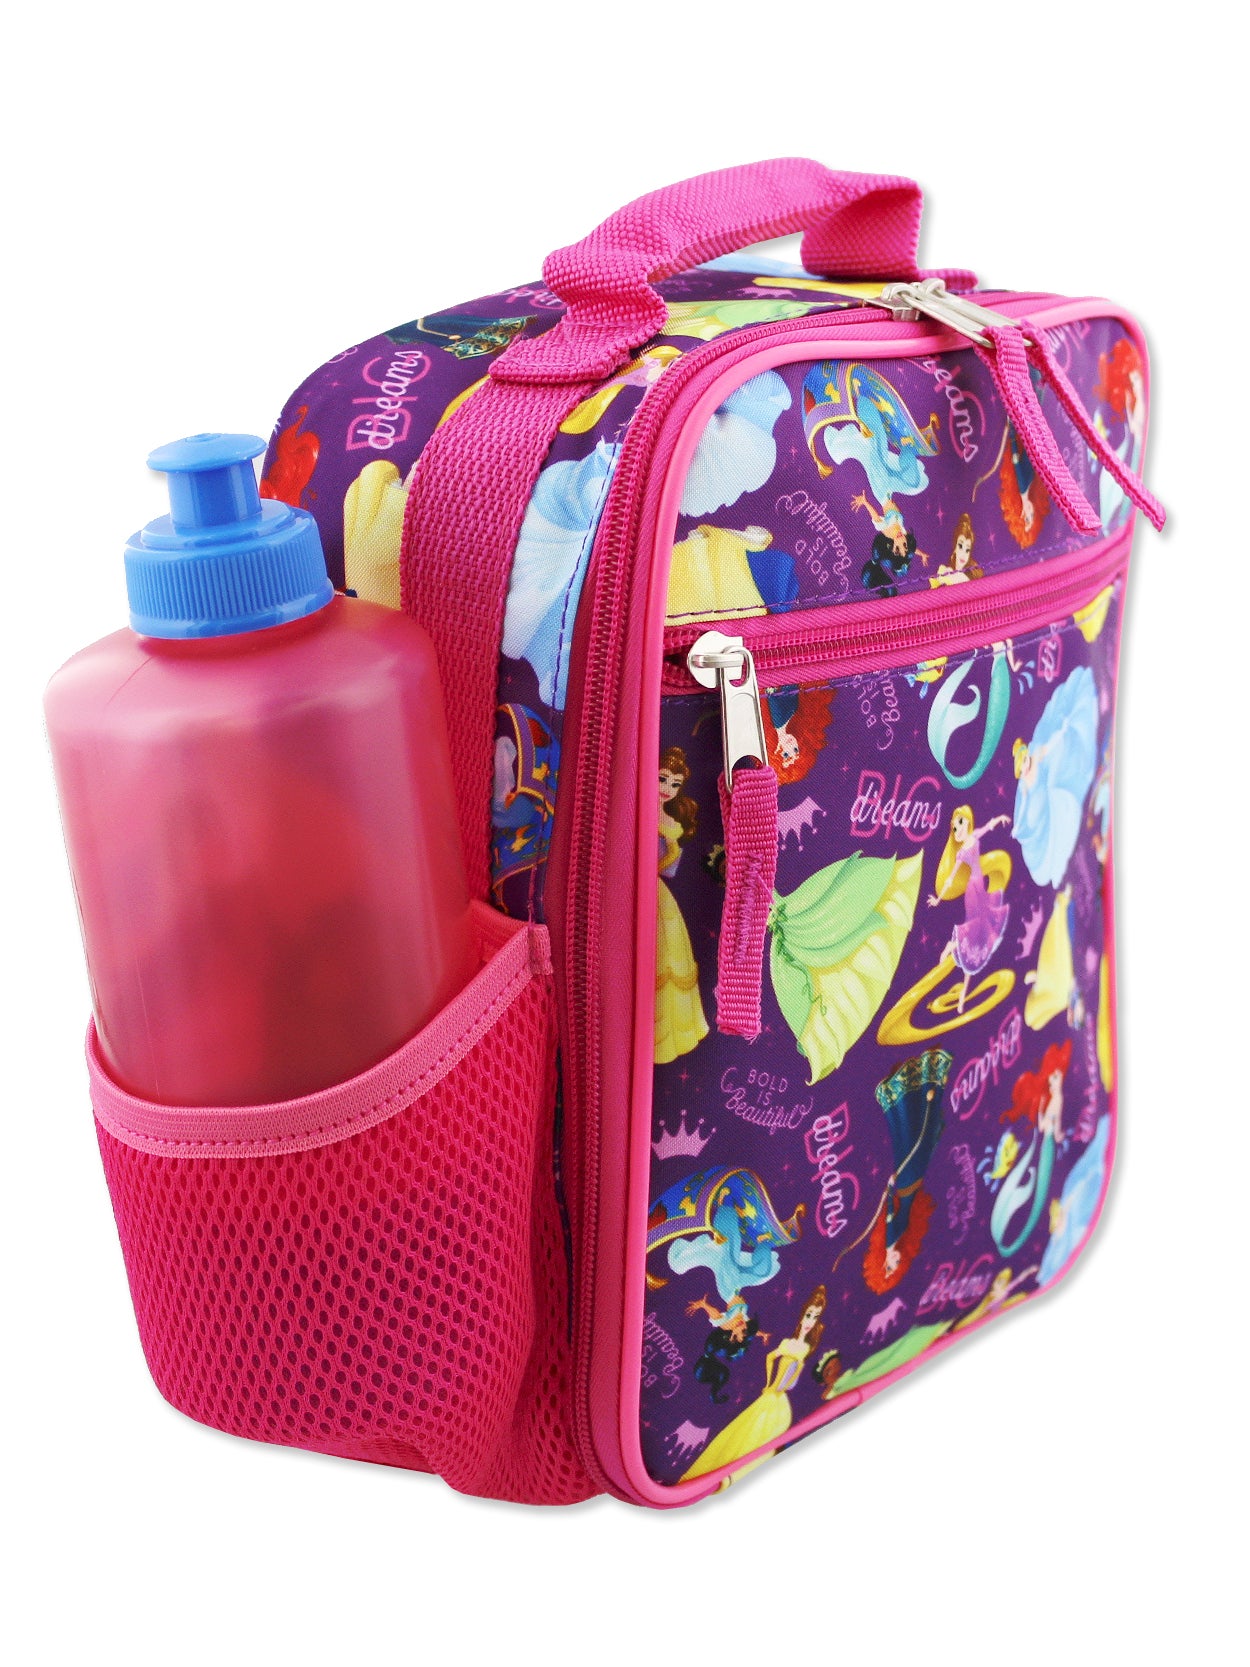 Disney Princess Lunch Box Bag Pink w/ Bottle Back School Bella